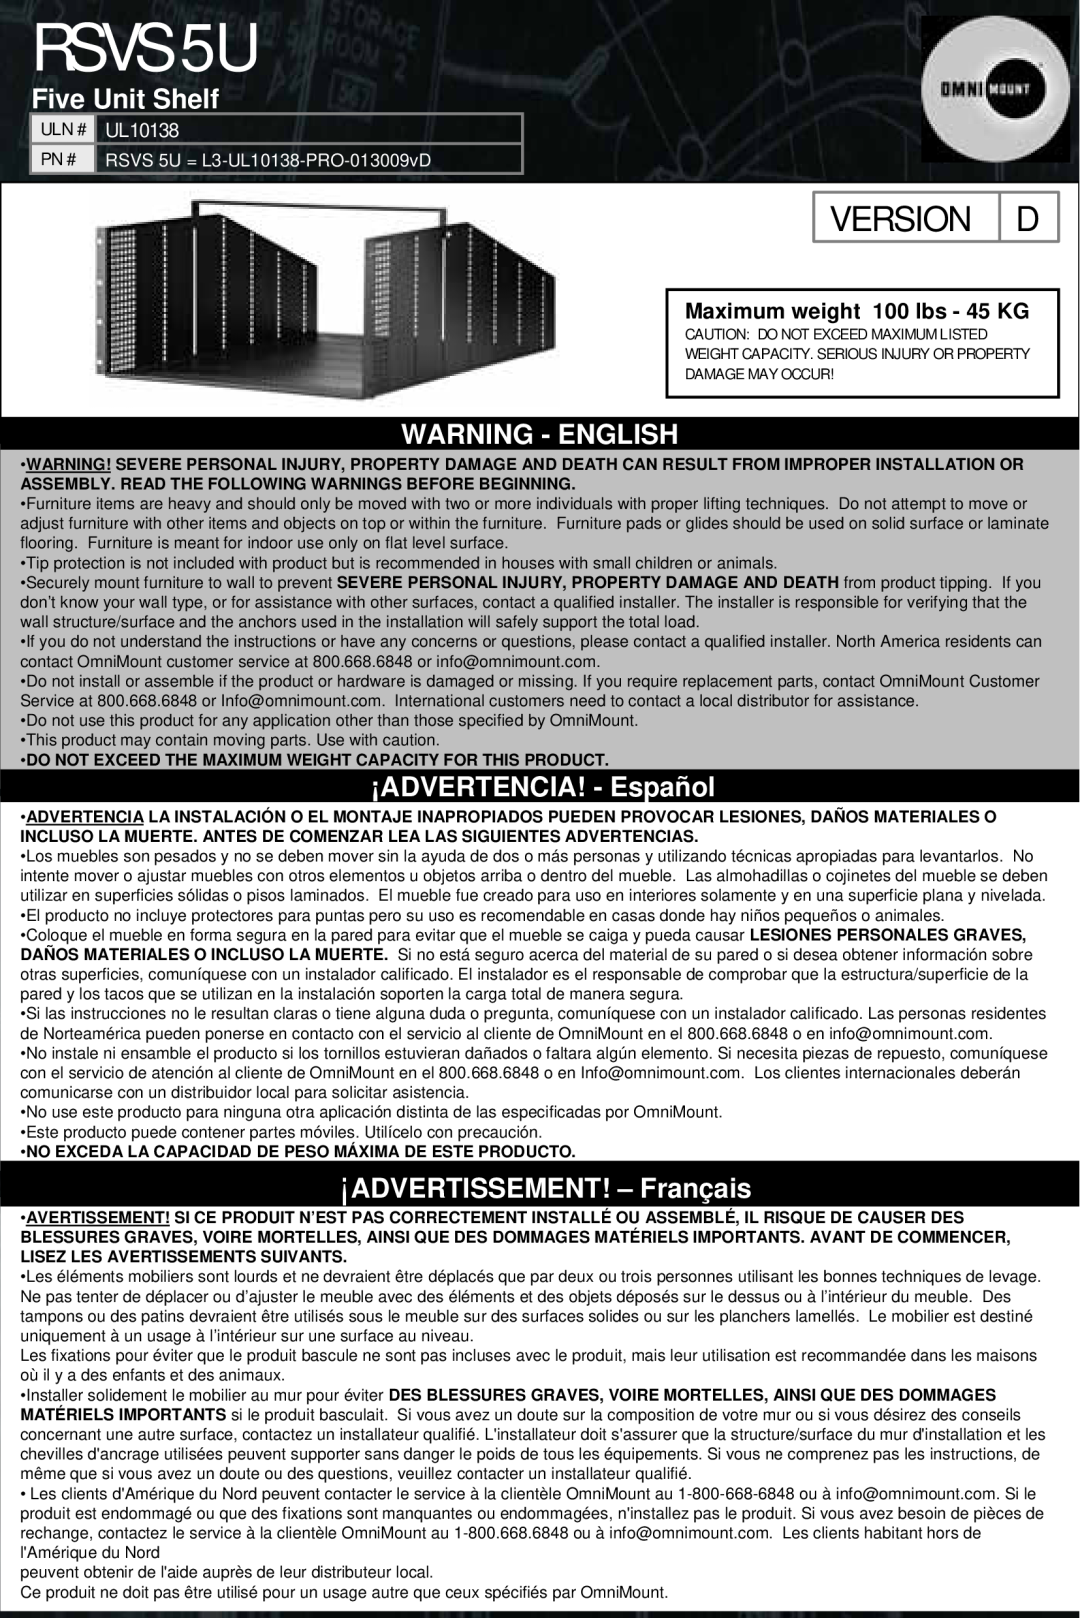 Omnimount RSVS5U manual Five Unit Shelf, Warning - English, ¡ADVERTENCIA! - Español, ¡ADVERTISSEMENT! - Français, RSVS 5U 